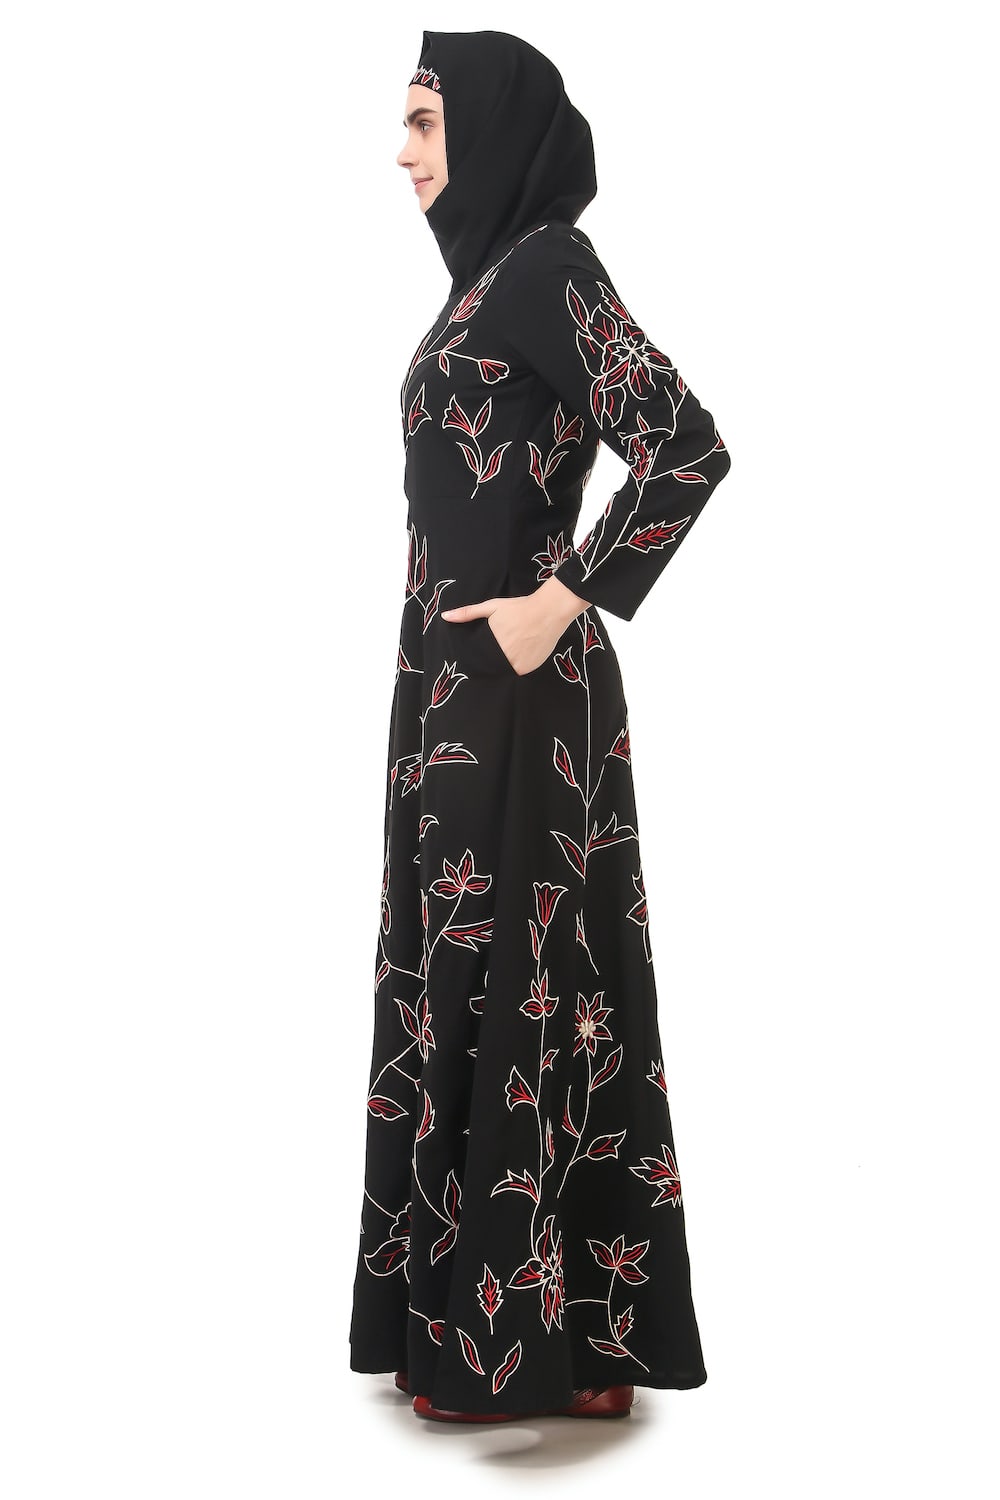 All Over Floral Embroidered Semi Circular Abaya